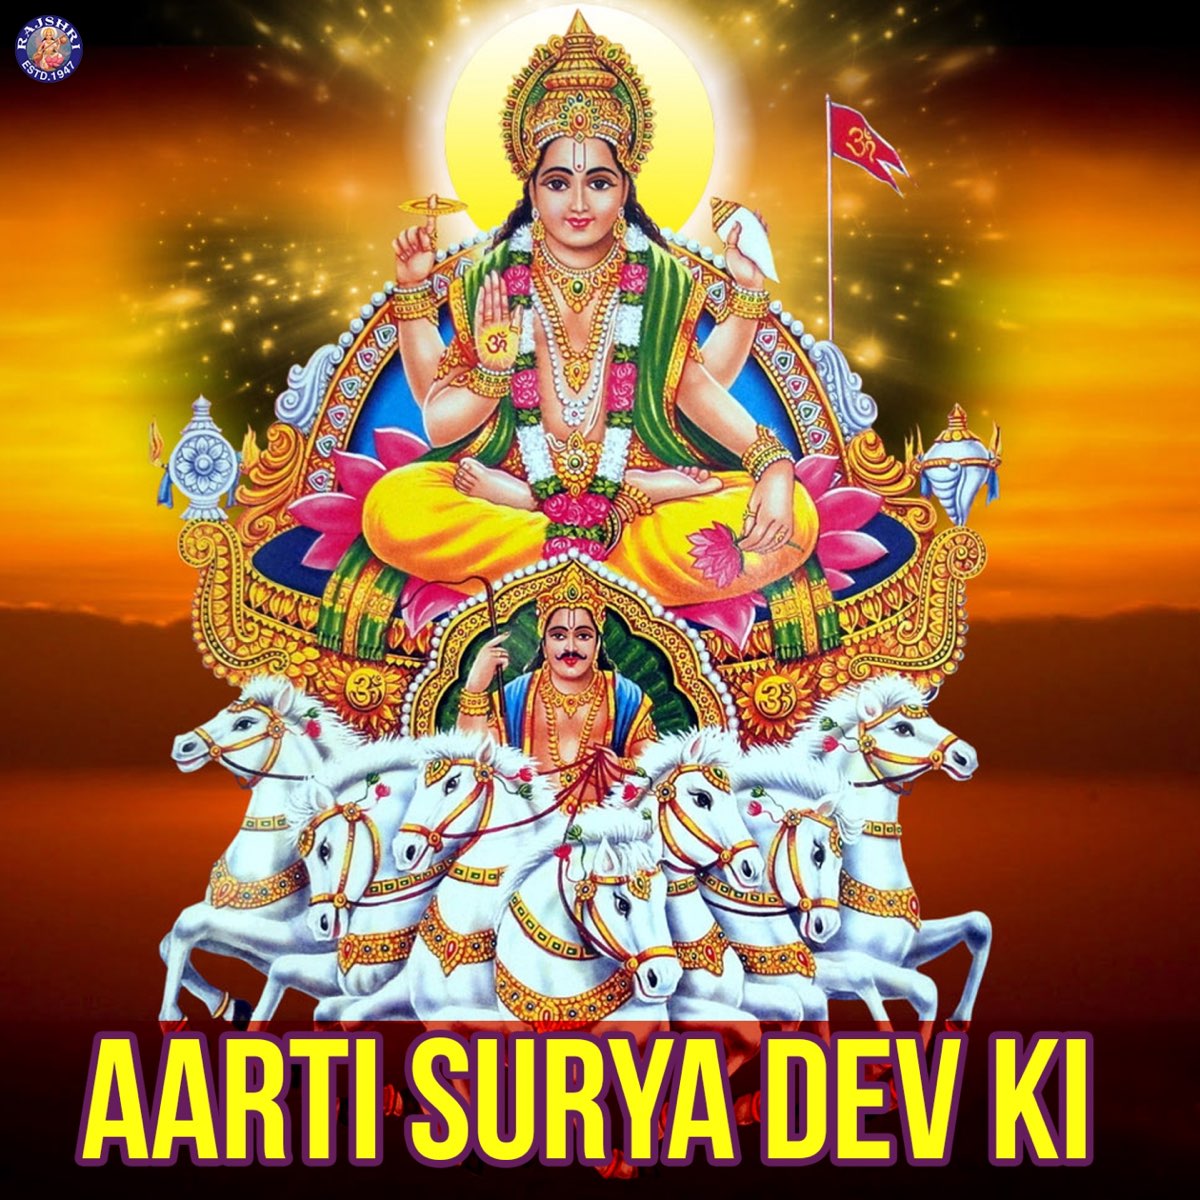 Aarti Surya Dev Ki by Rajalakshmee Sanjay, Mukteshwar Aanand ...